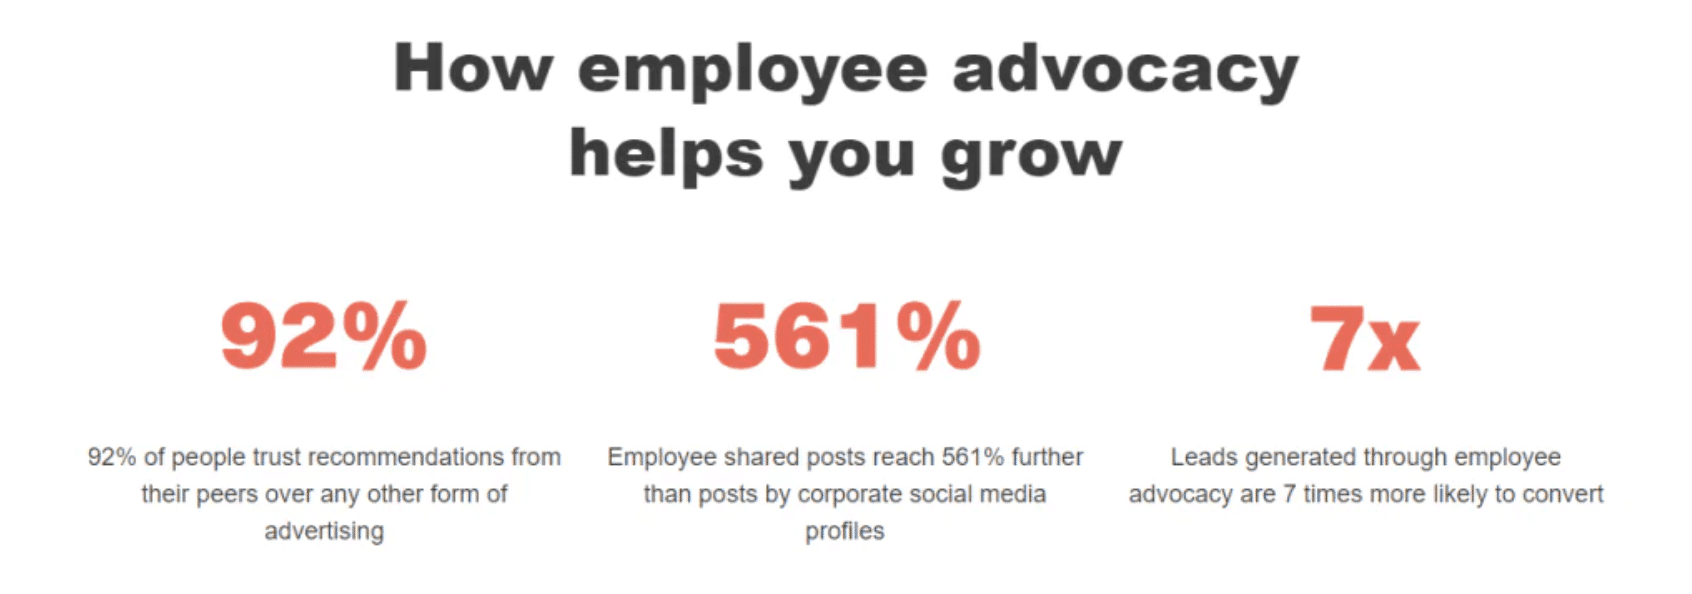 graphic shows employee advocacy statistics 